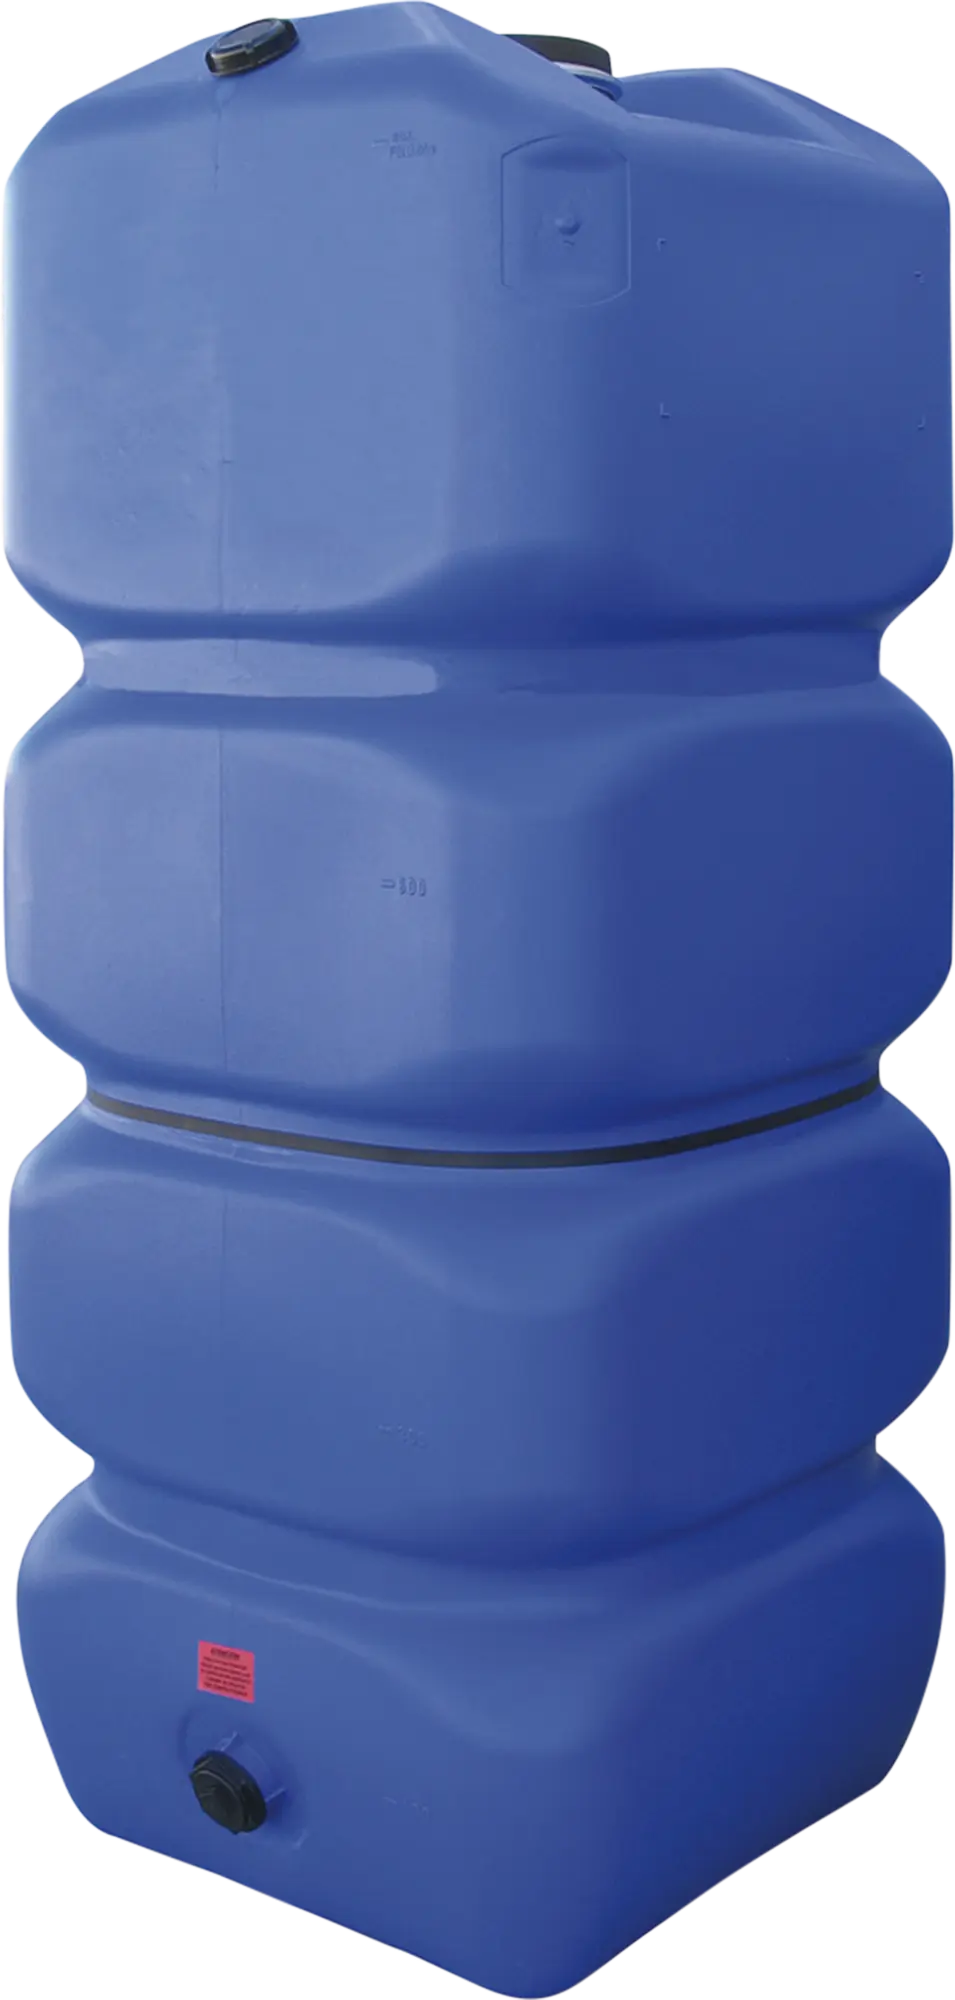 DEPÓSITO rectangular Azul de polietileno para Agua potable. Capacidad 1000  litros. Largo 135 cm, Ancho 62 cm, Alto 171 cm